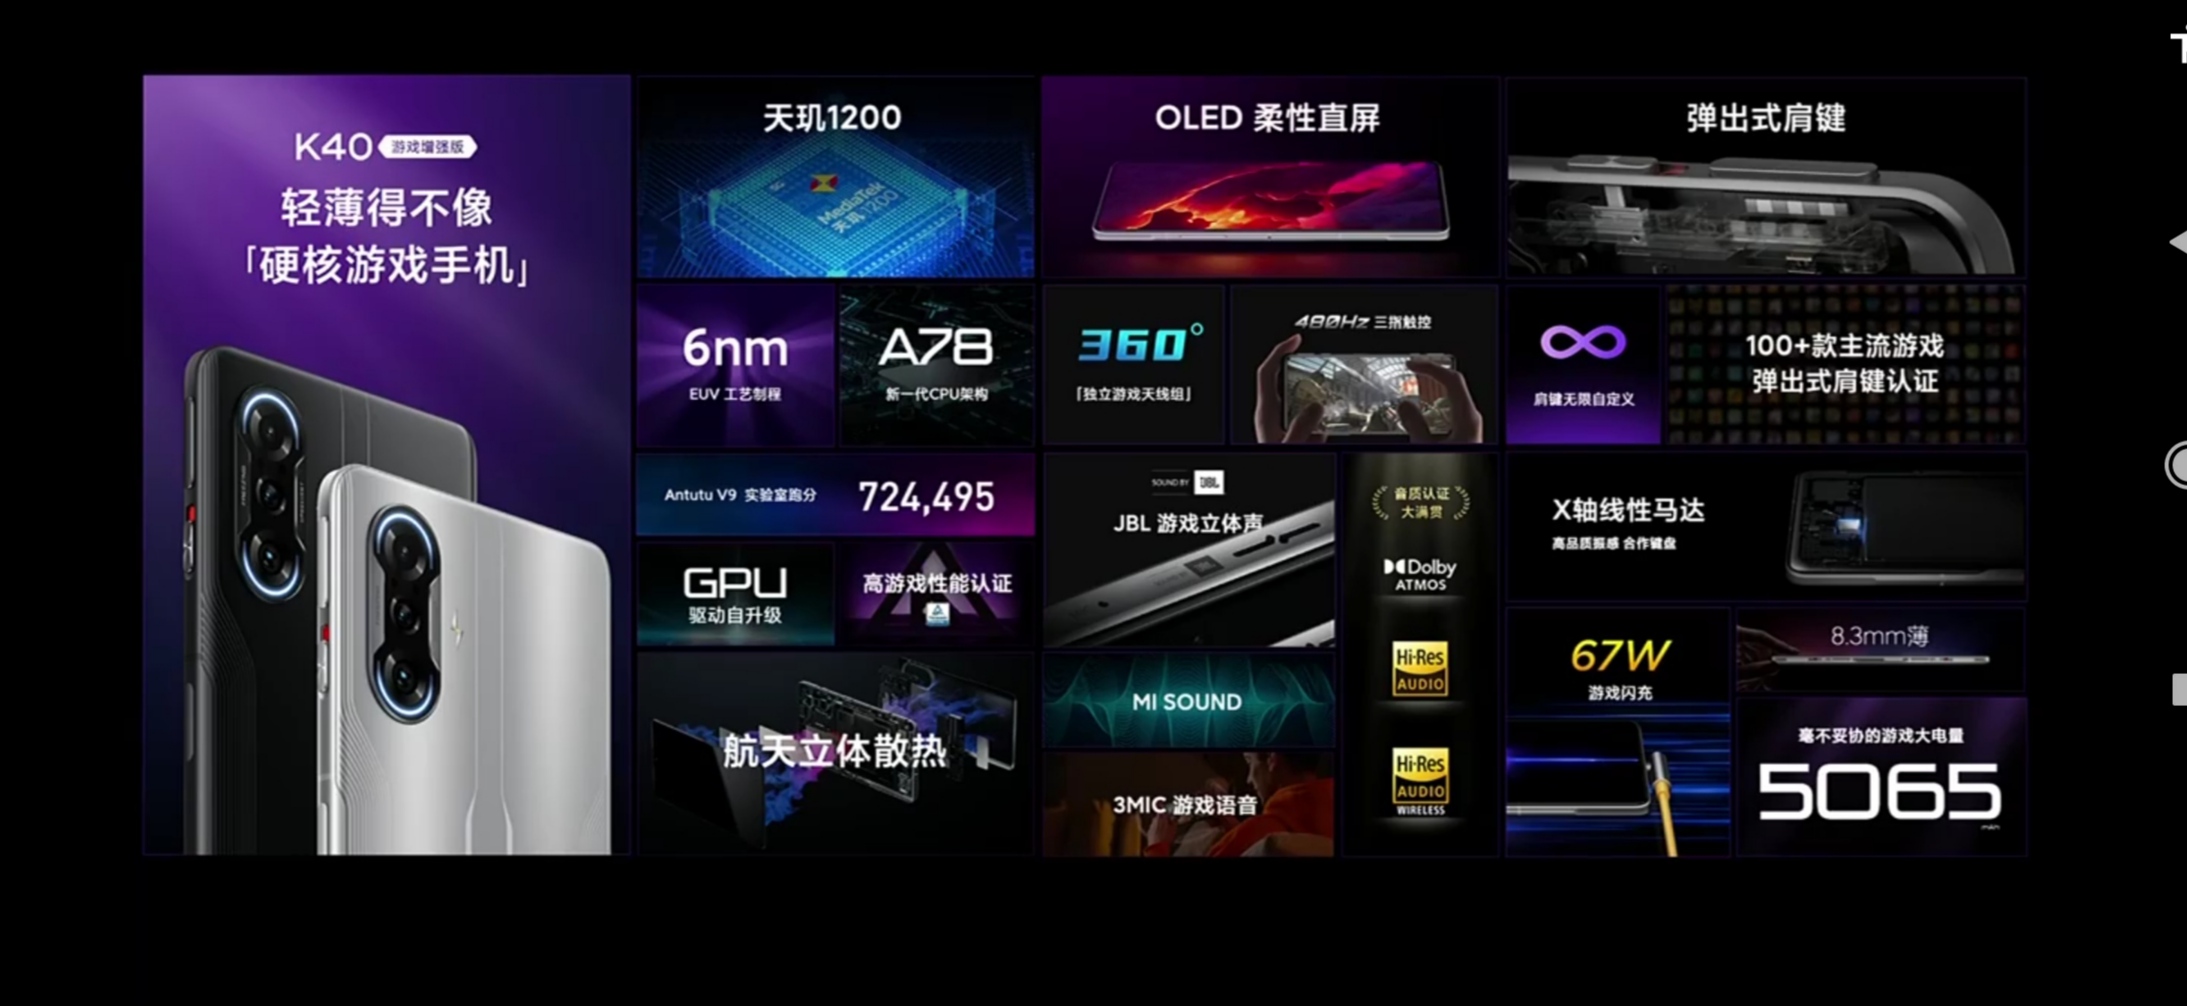 Redmi gaming enhanced edition. Xiaomi Redmi k40 Gaming. Редми к40 гейминг эдишн. Xiaomi Redmi 40 game enhanced Edition. Redmi k40 характеристики.